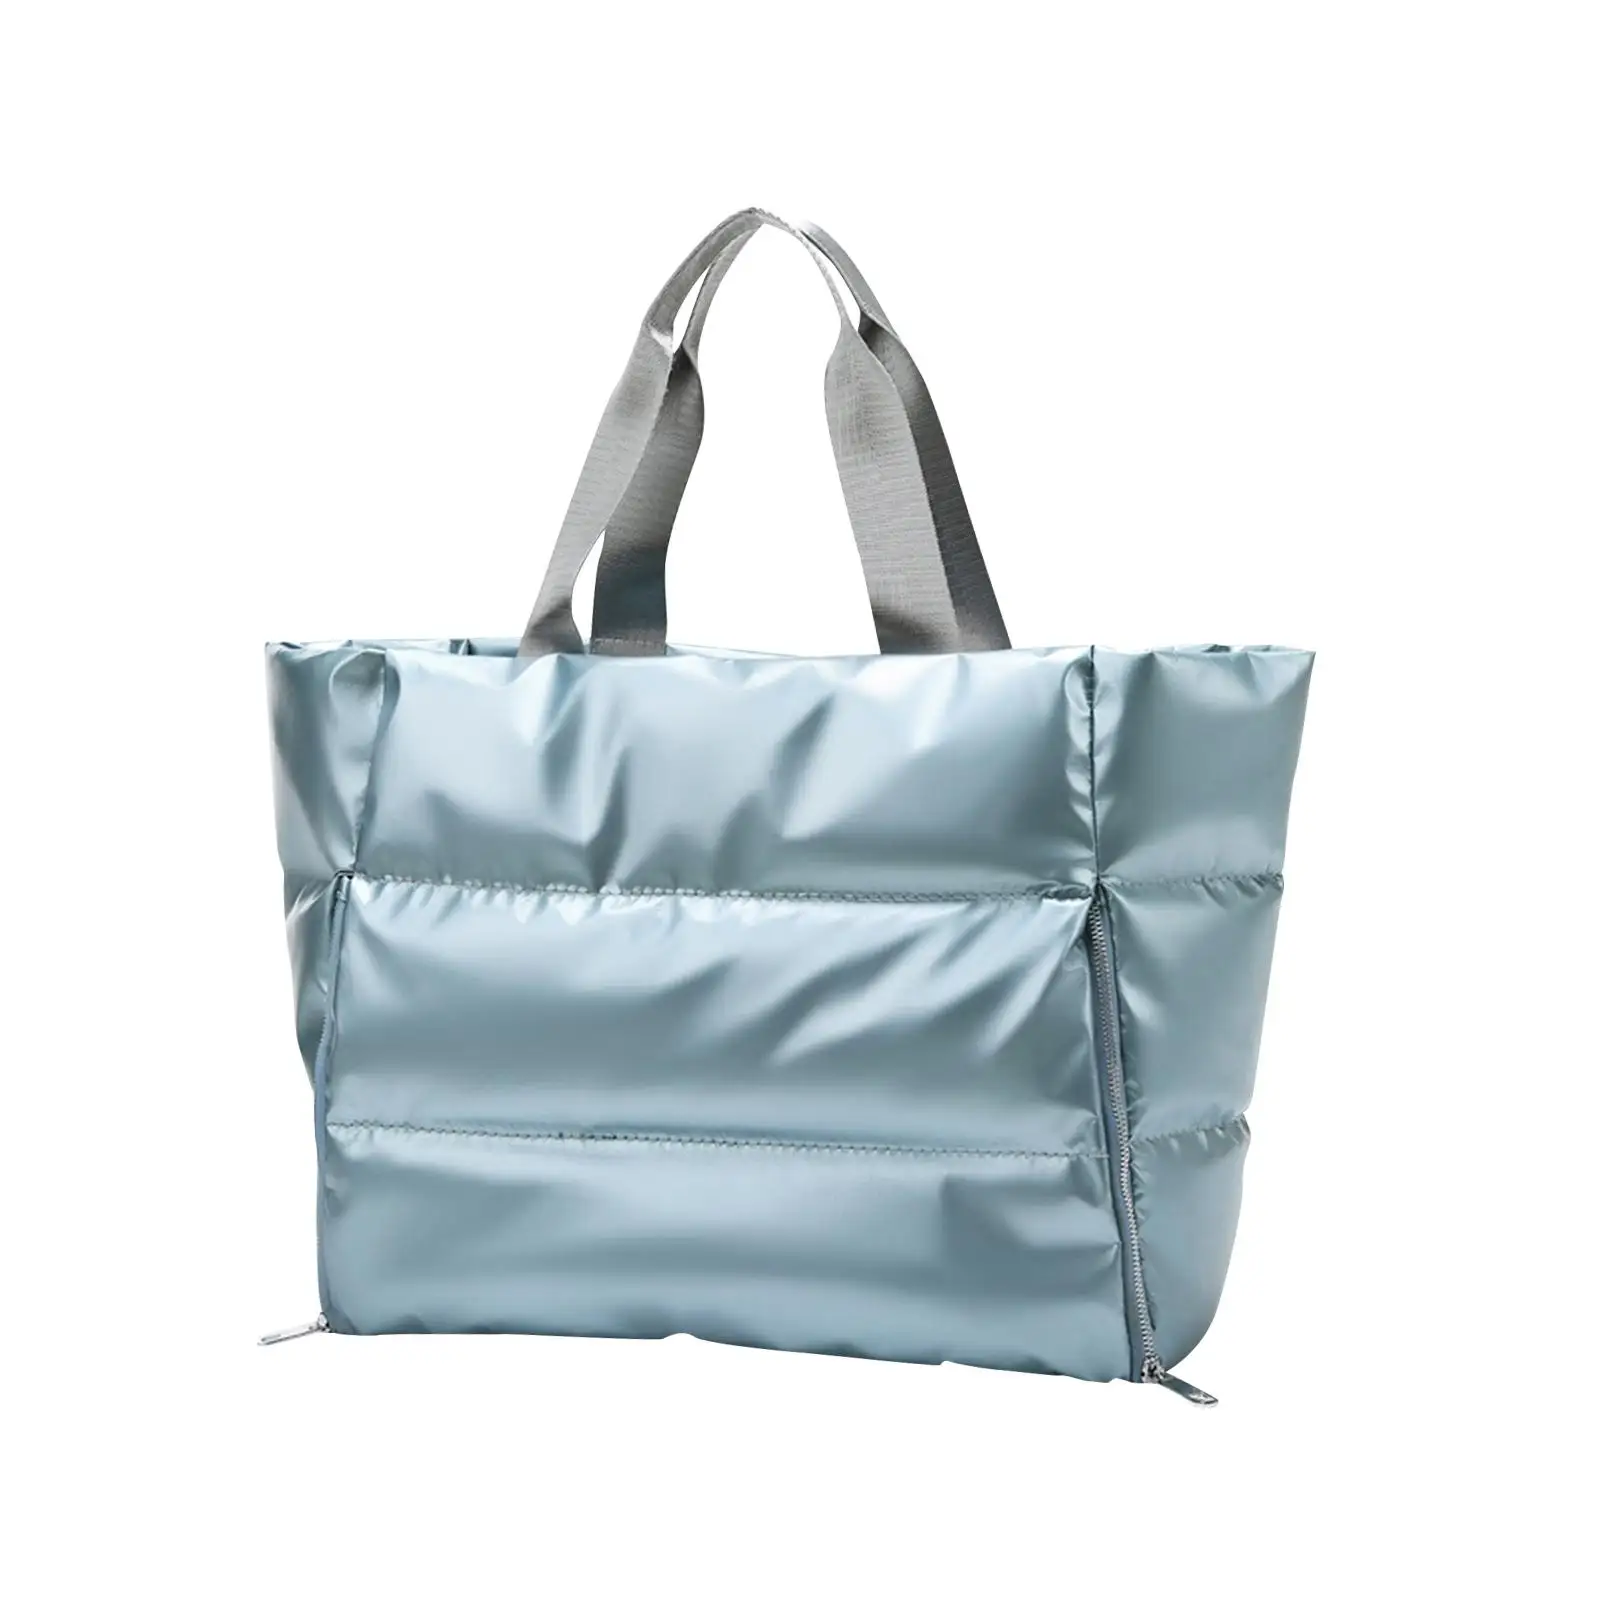 Sports Gym Bag Travel Adjustable and Detachable Shoulder Strap Duffle Bag Tote Crossbody Bag for Golf Trip Yoga Camping Fitness